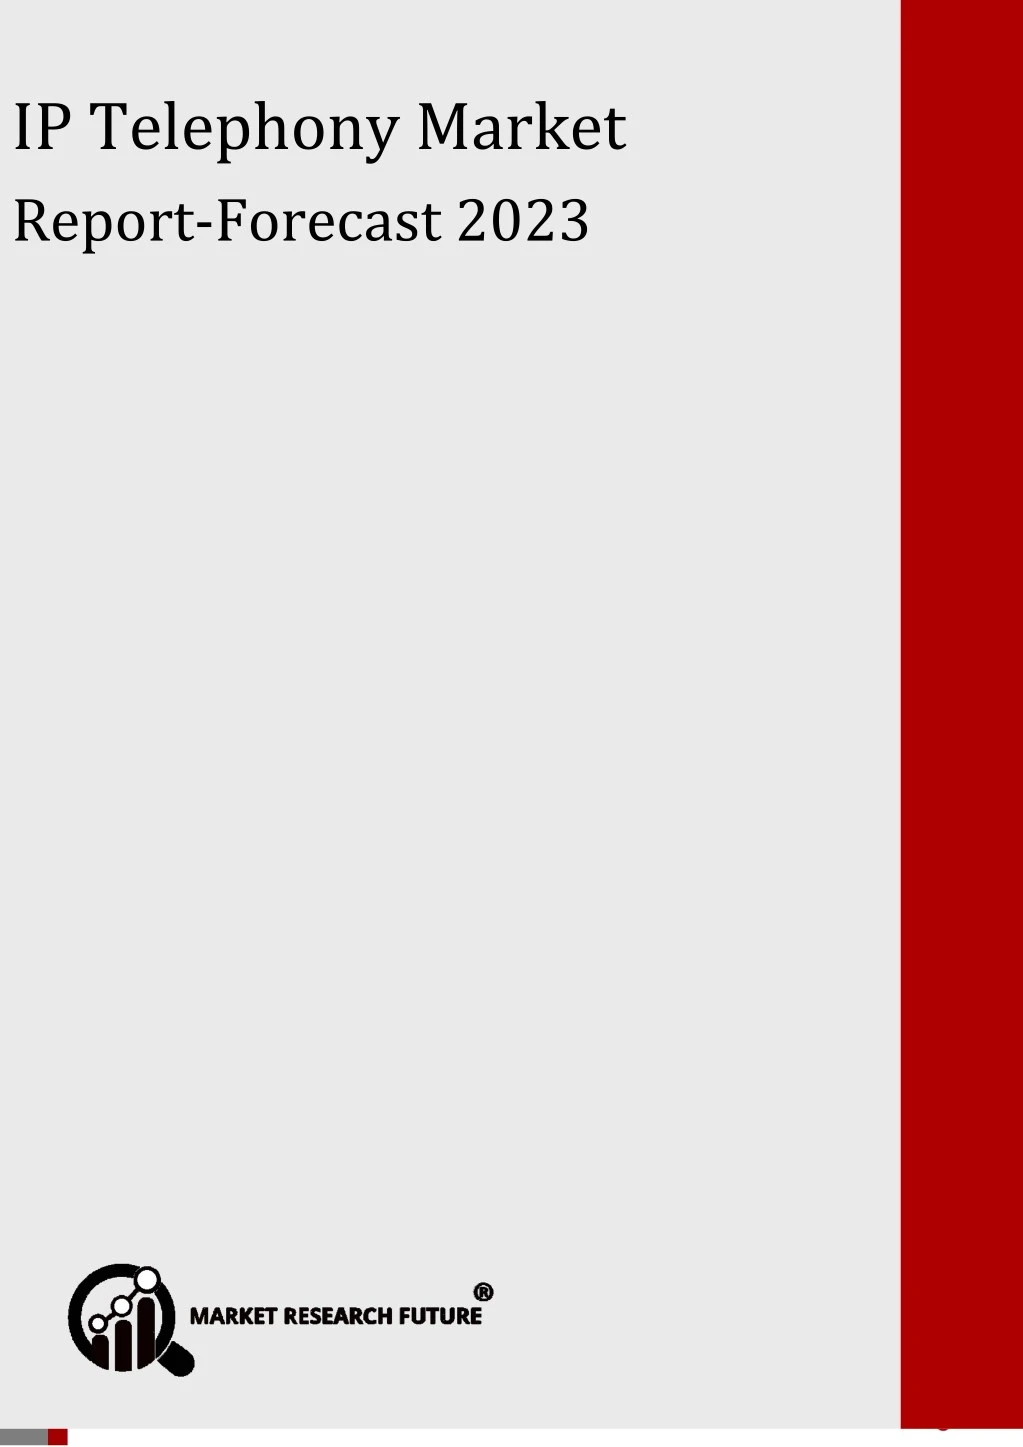 ip telephony market report forecast 2023